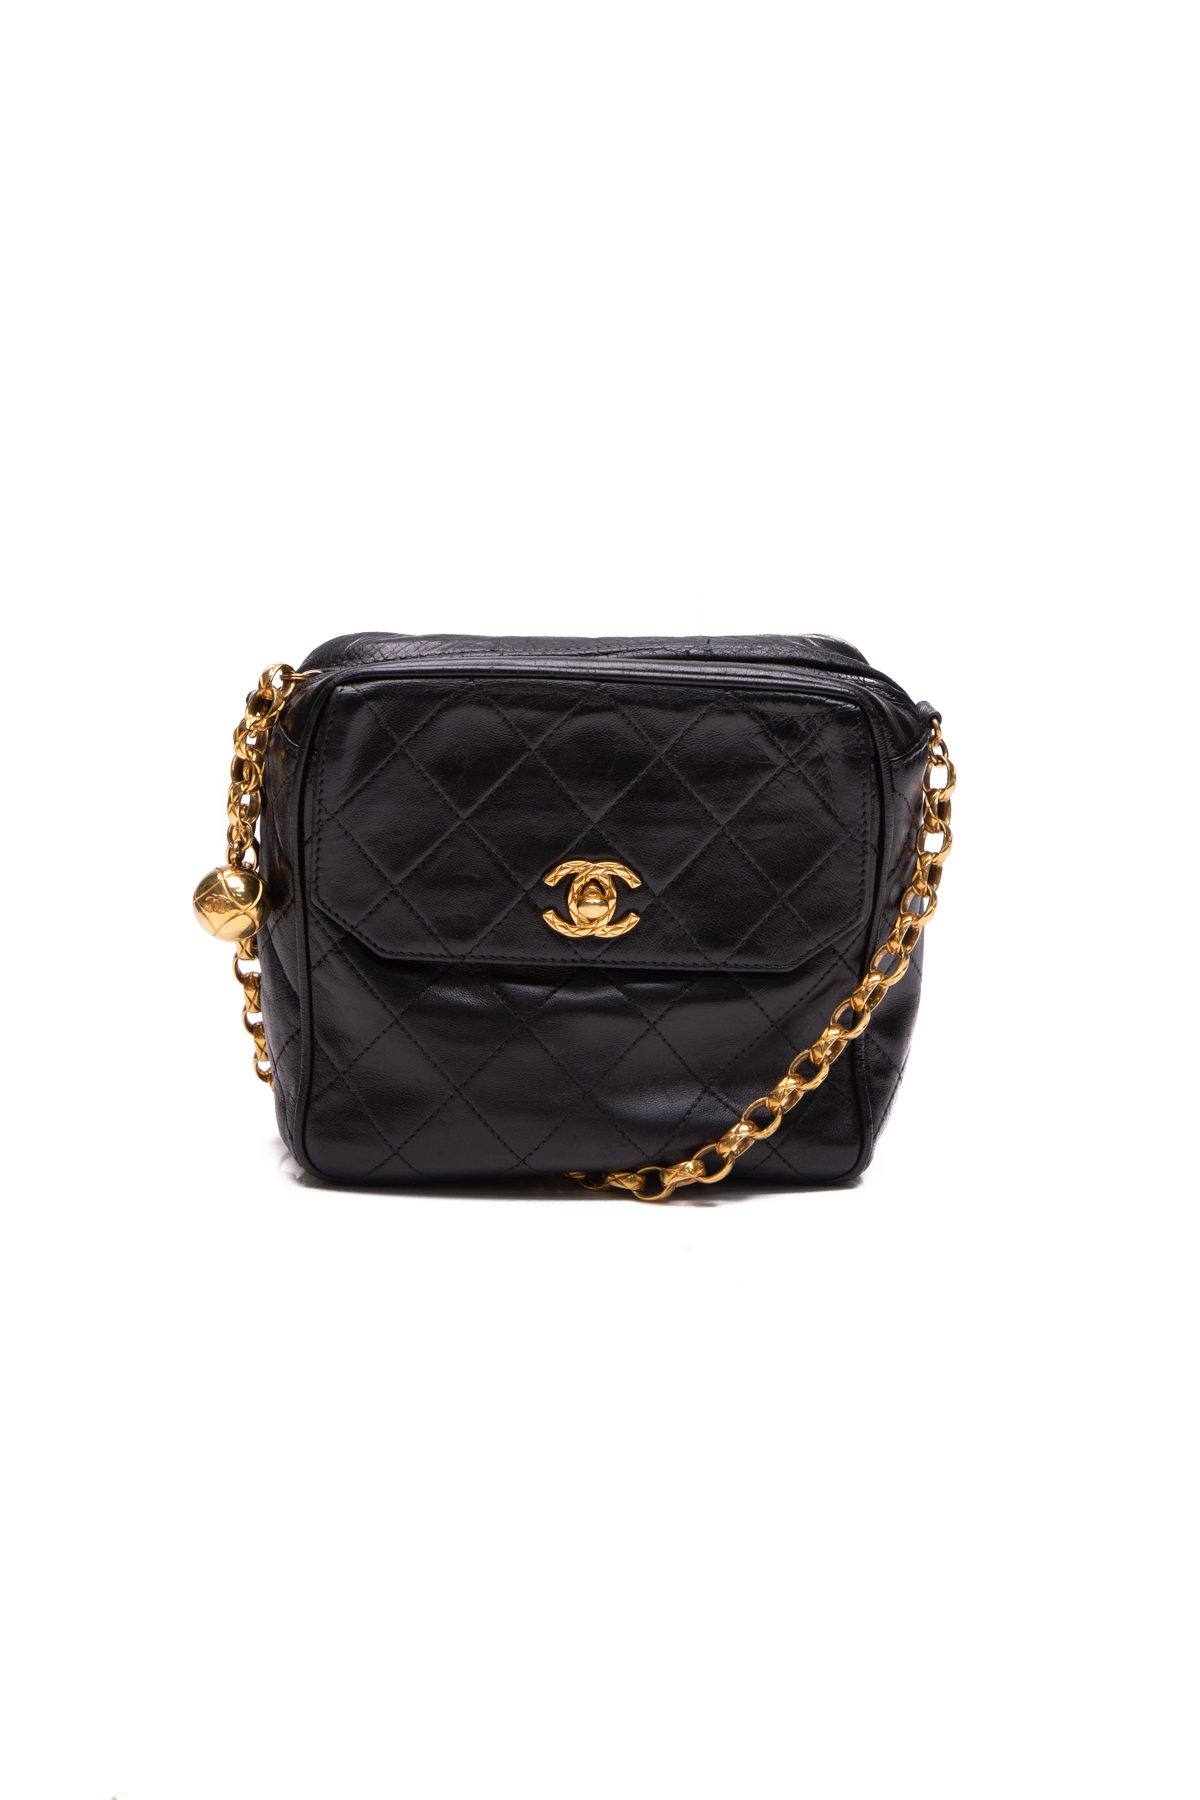 Vintage Chanel Gold Quilted Camera Bag (Gold)